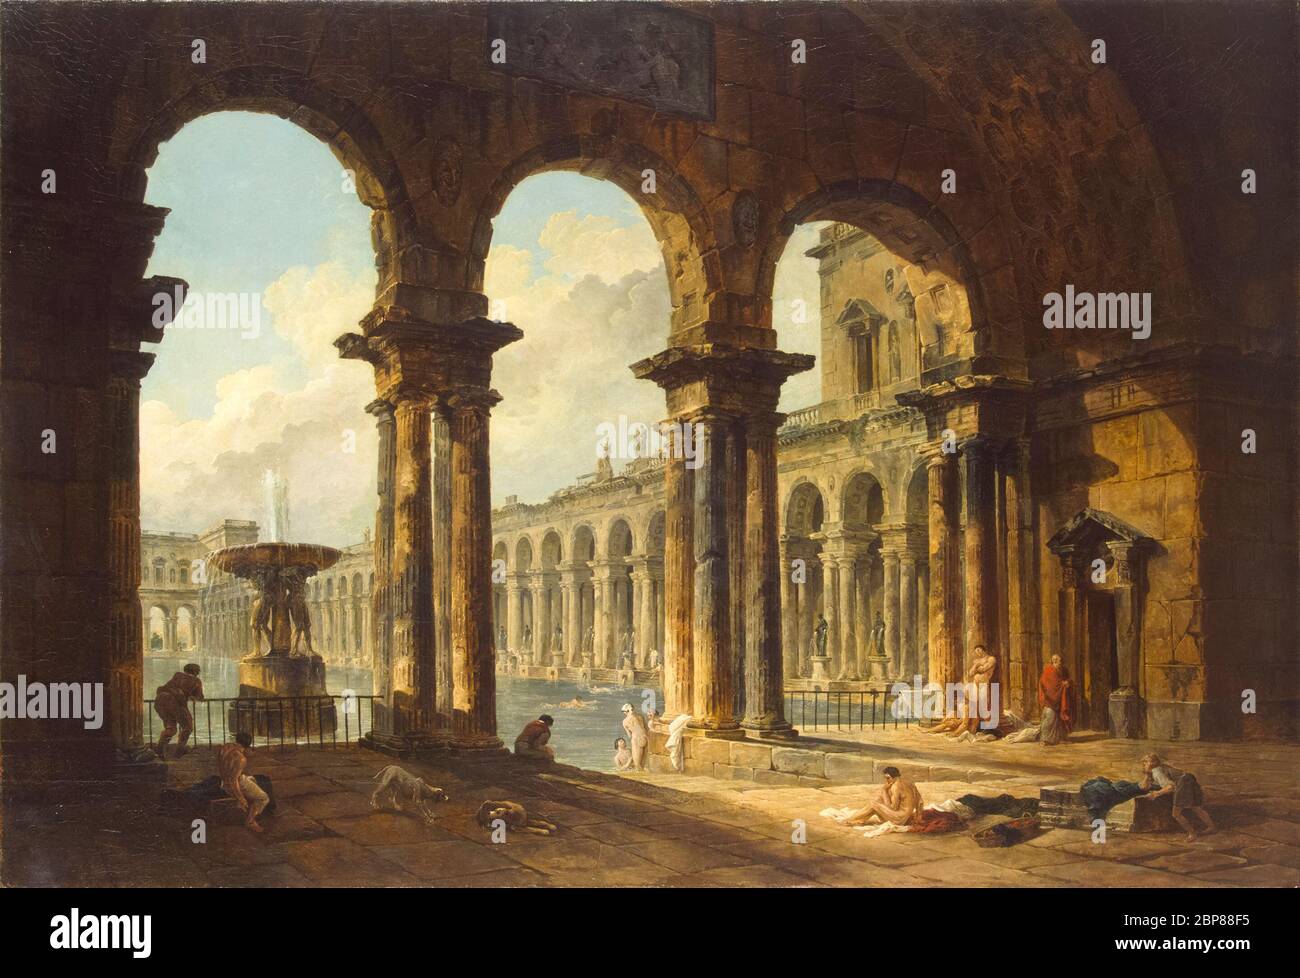 Hubert Robert, Ruinas antiguas utilizadas como Baños públicos, pintura, 1798 Foto de stock